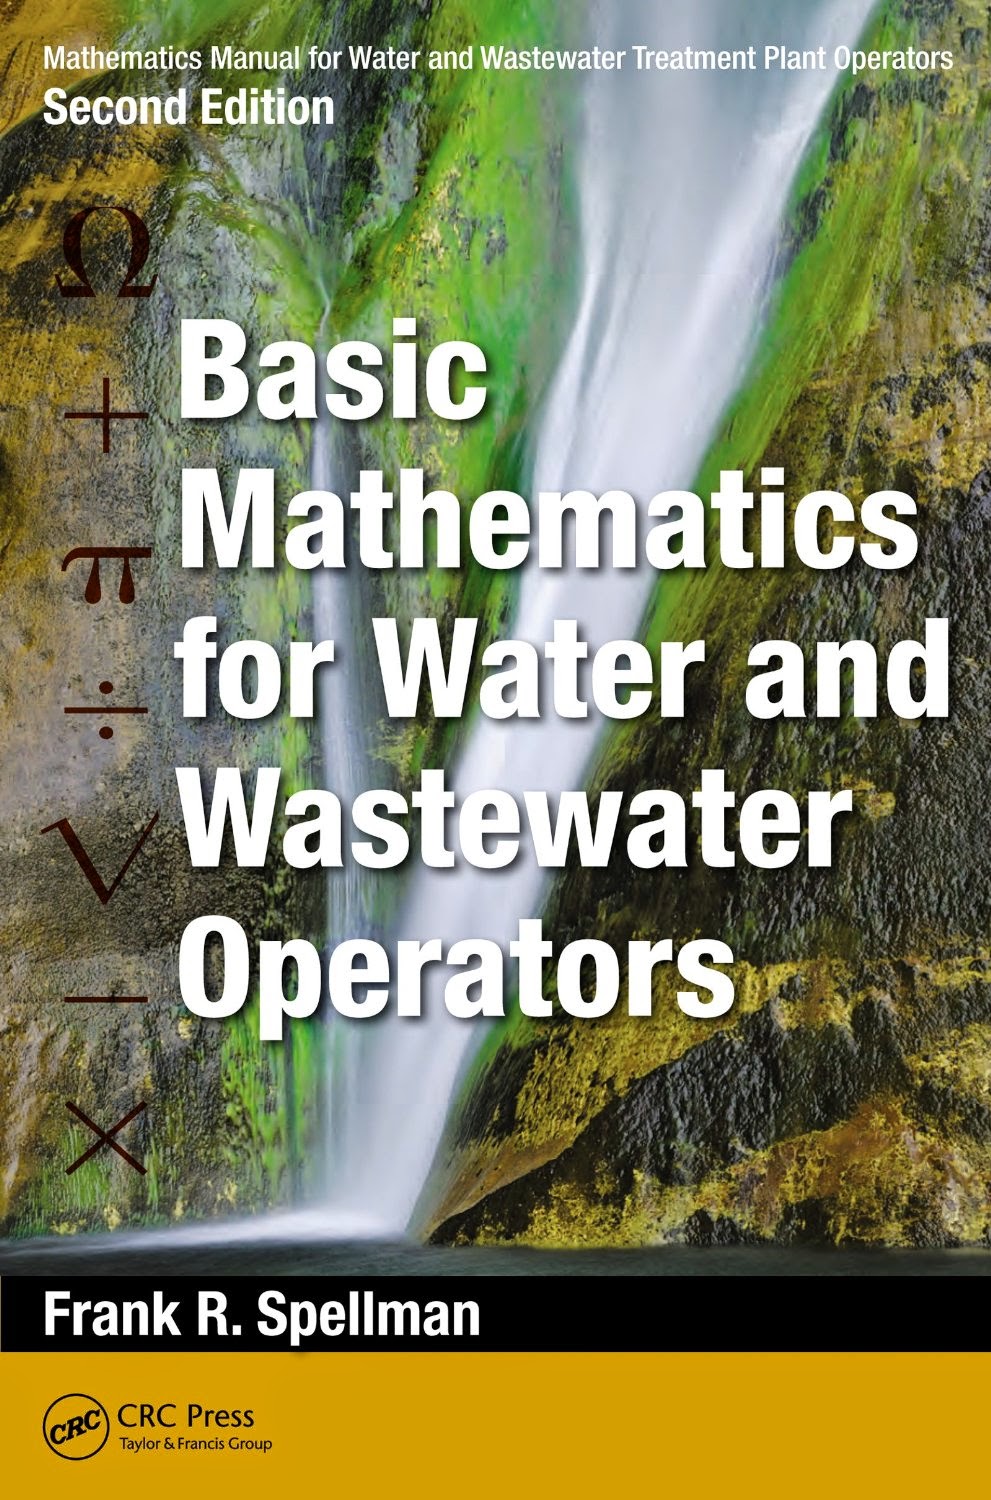 http://kingcheapebook.blogspot.com/2014/08/mathematics-manual-for-water-and.html